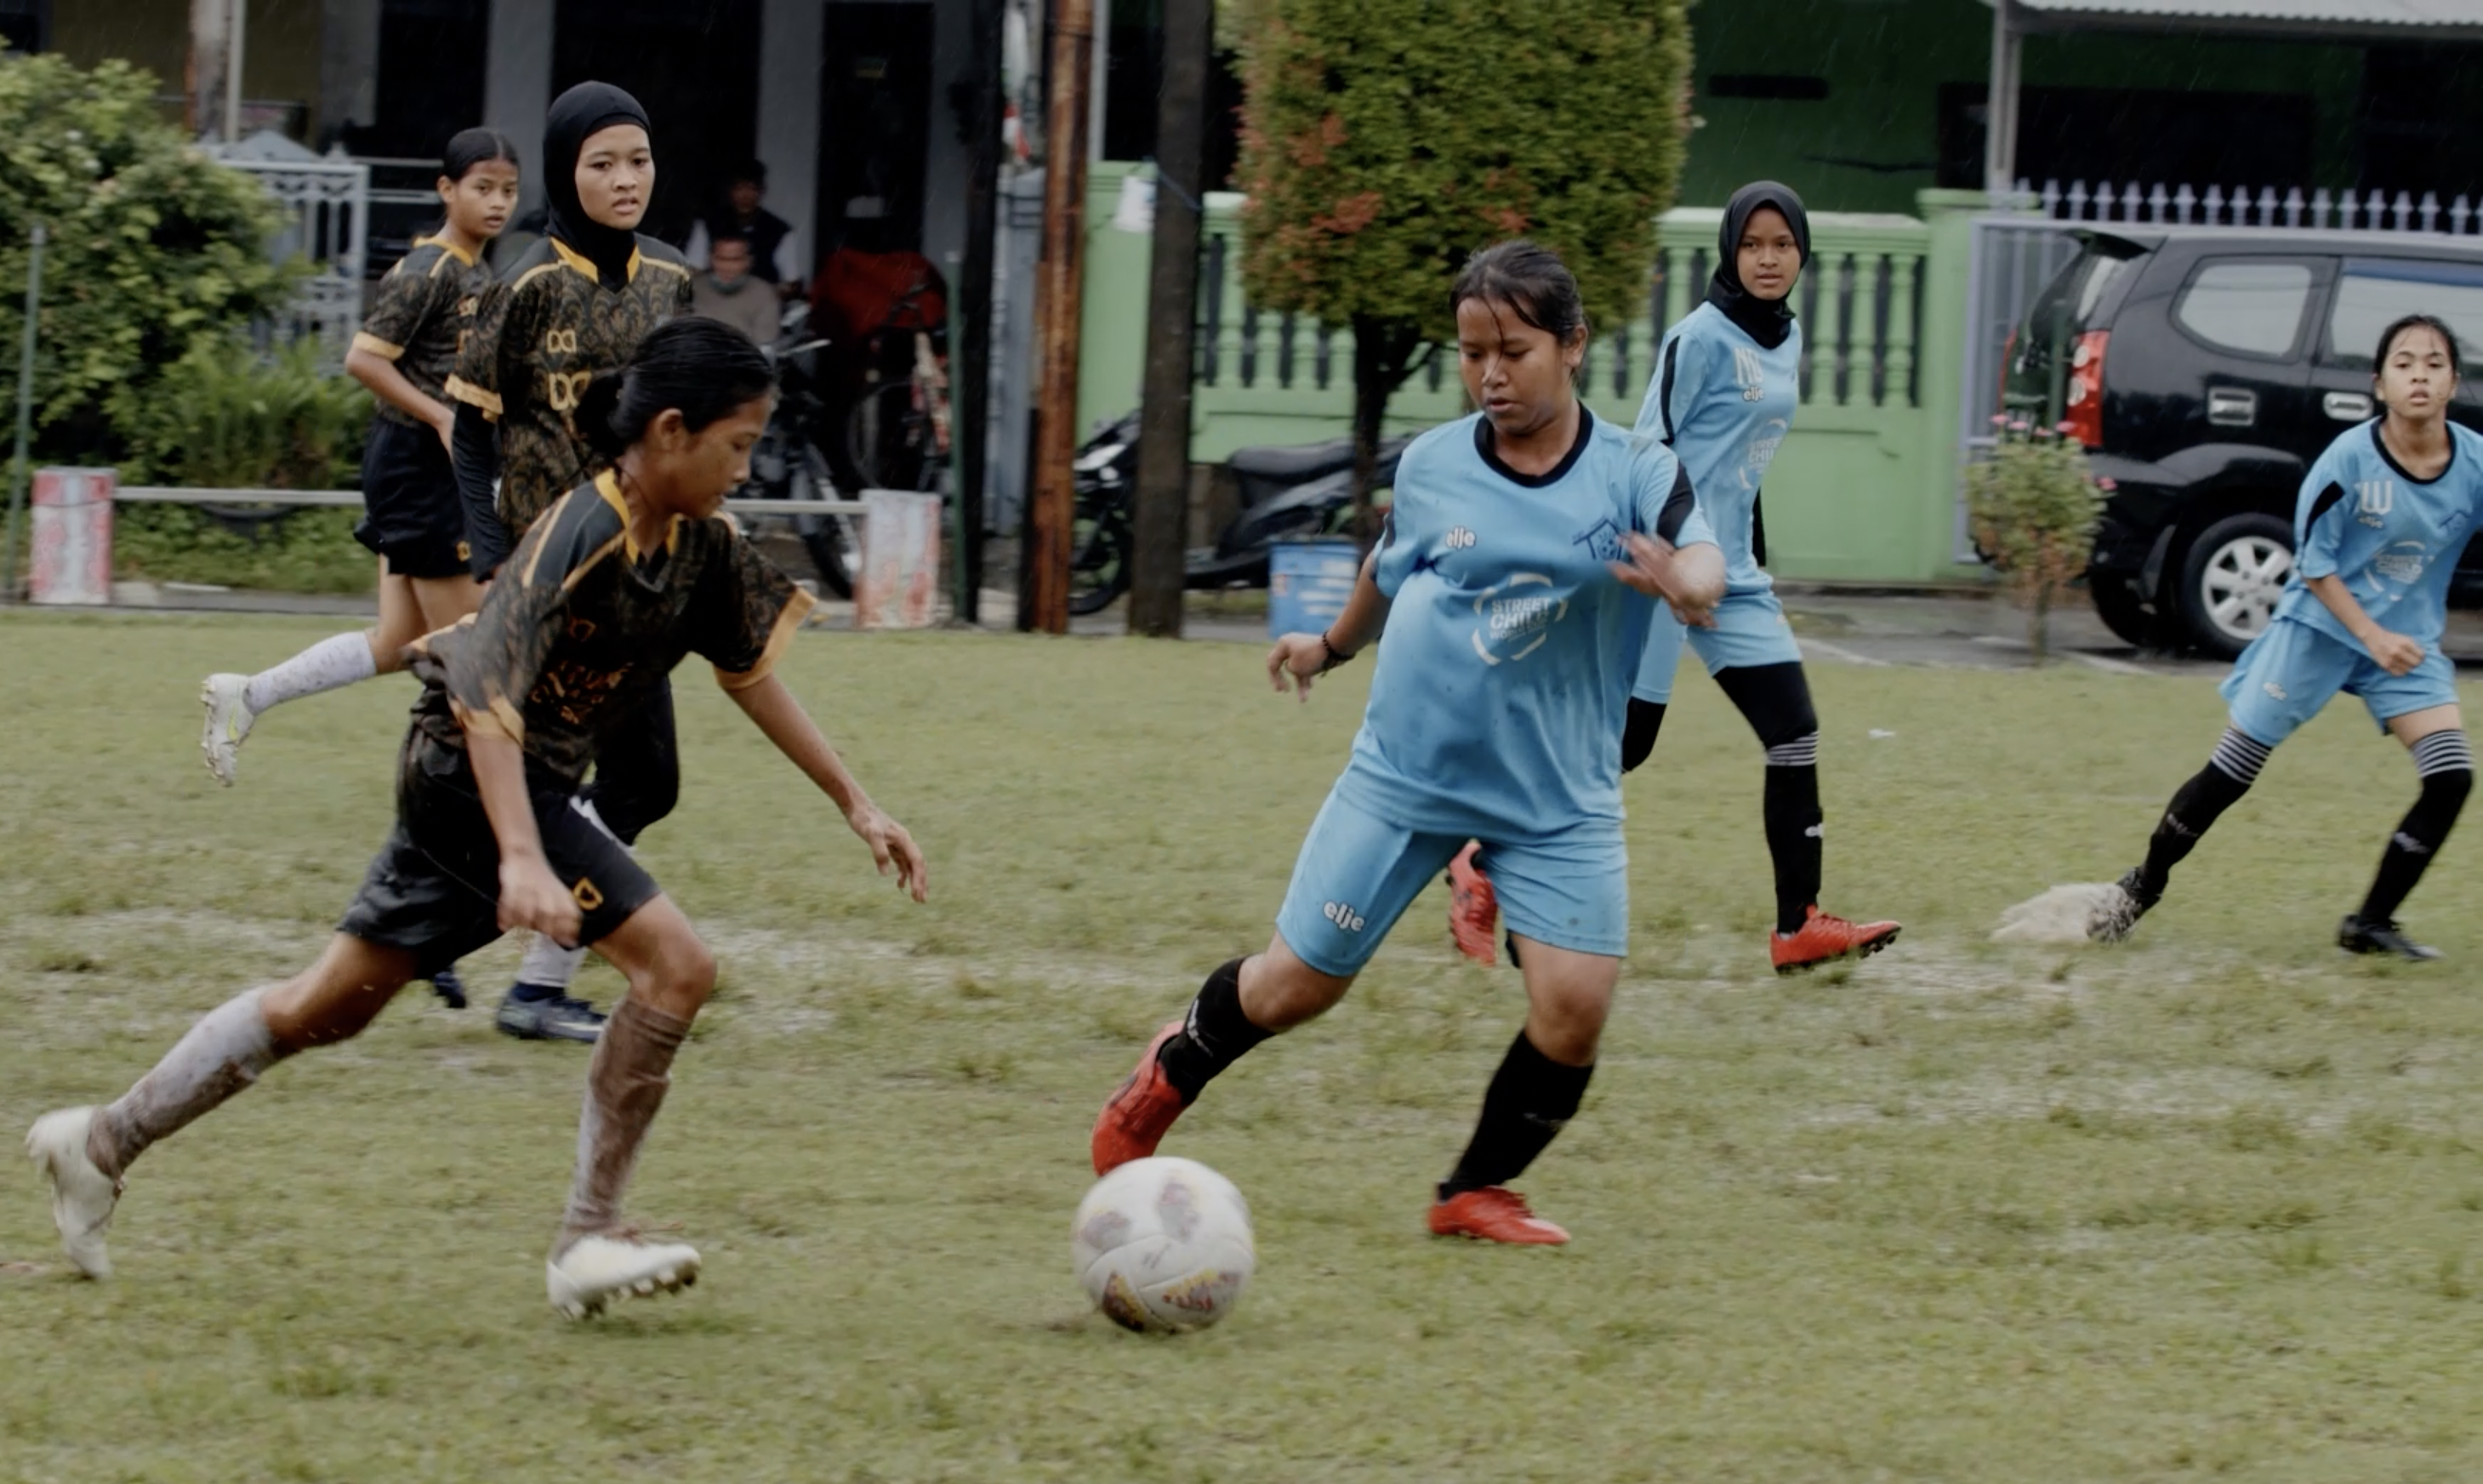  GOAL! Jakarta street kids dream of World Cup glory